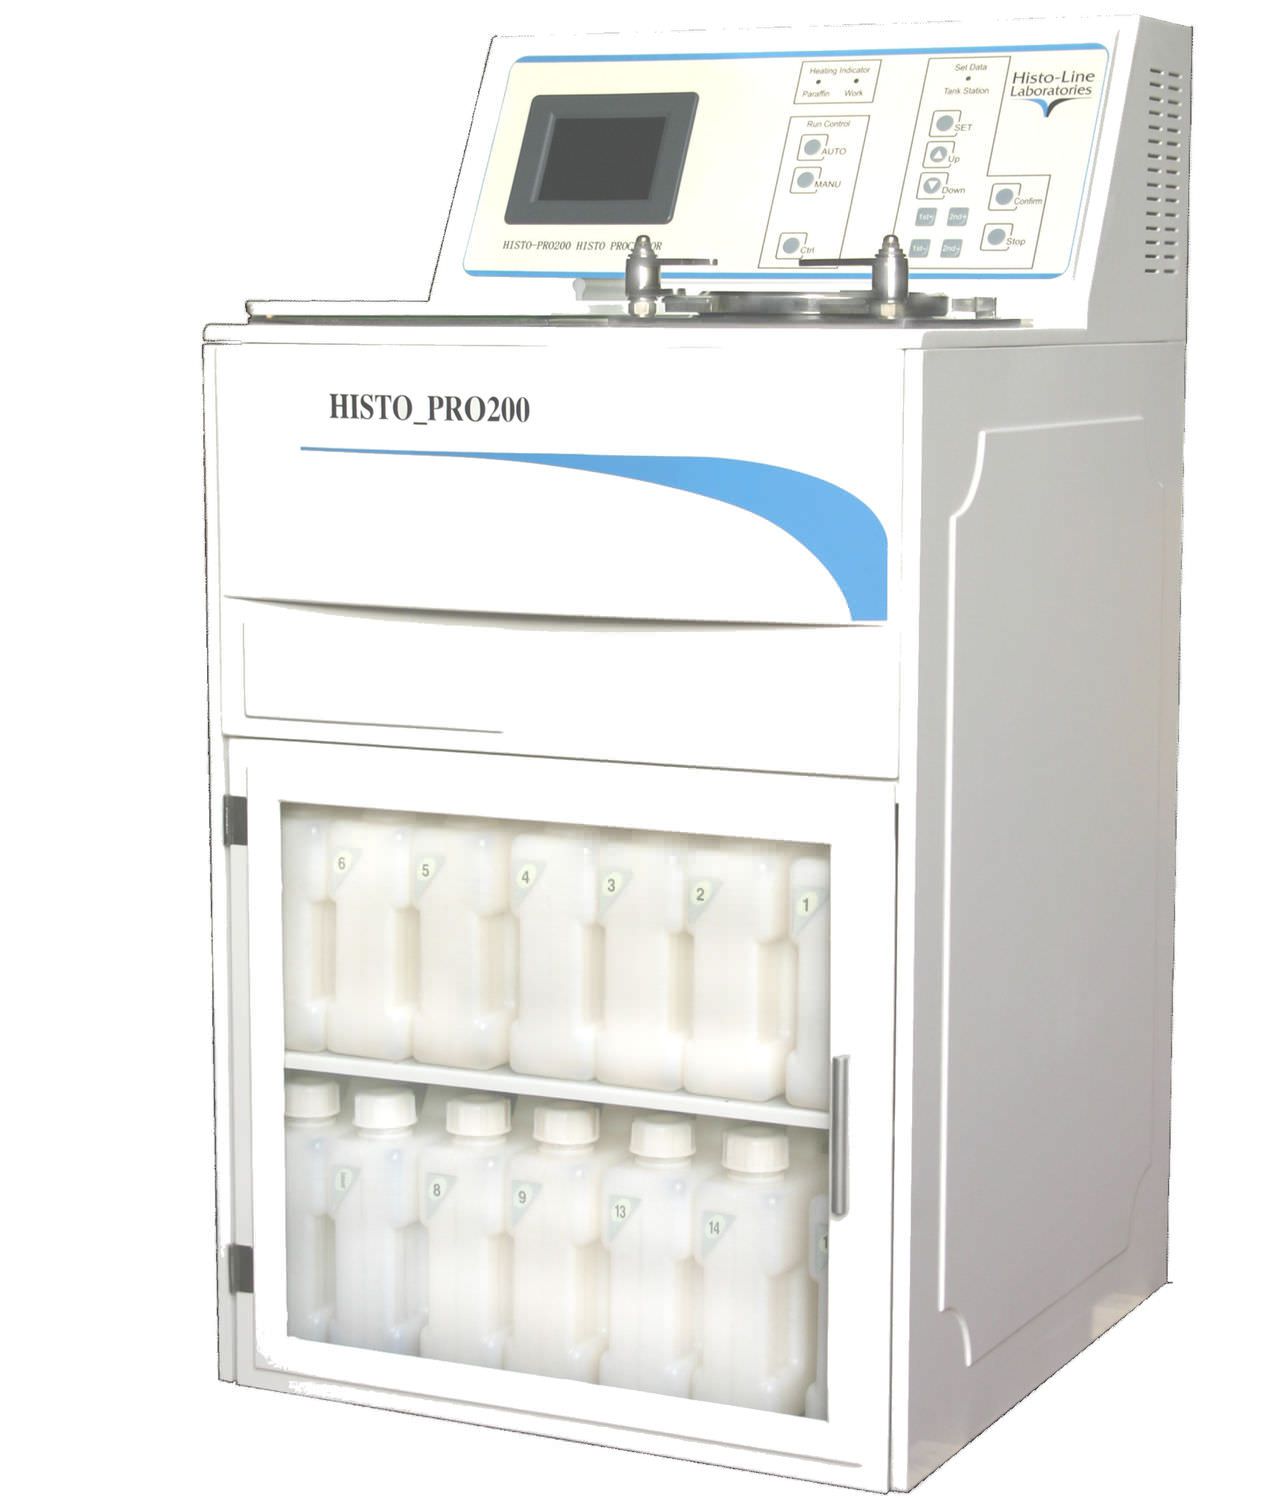 Tissue automatic sample preparation system / for histology / vacuum HISTO-PRO 200 Histo Line Laboratories